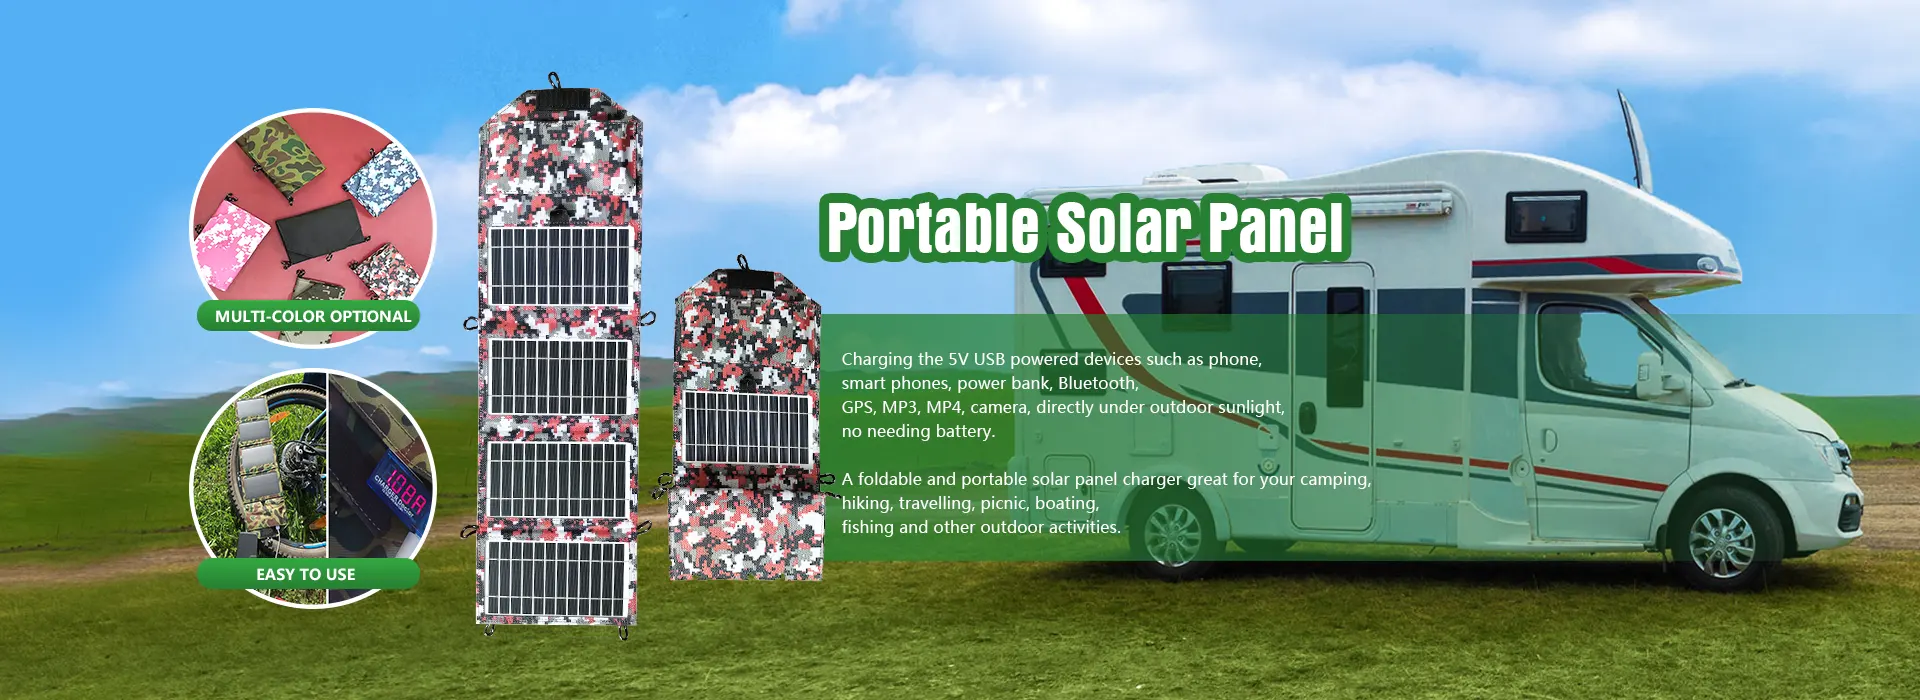 Portable solaris Panel Manufacturers